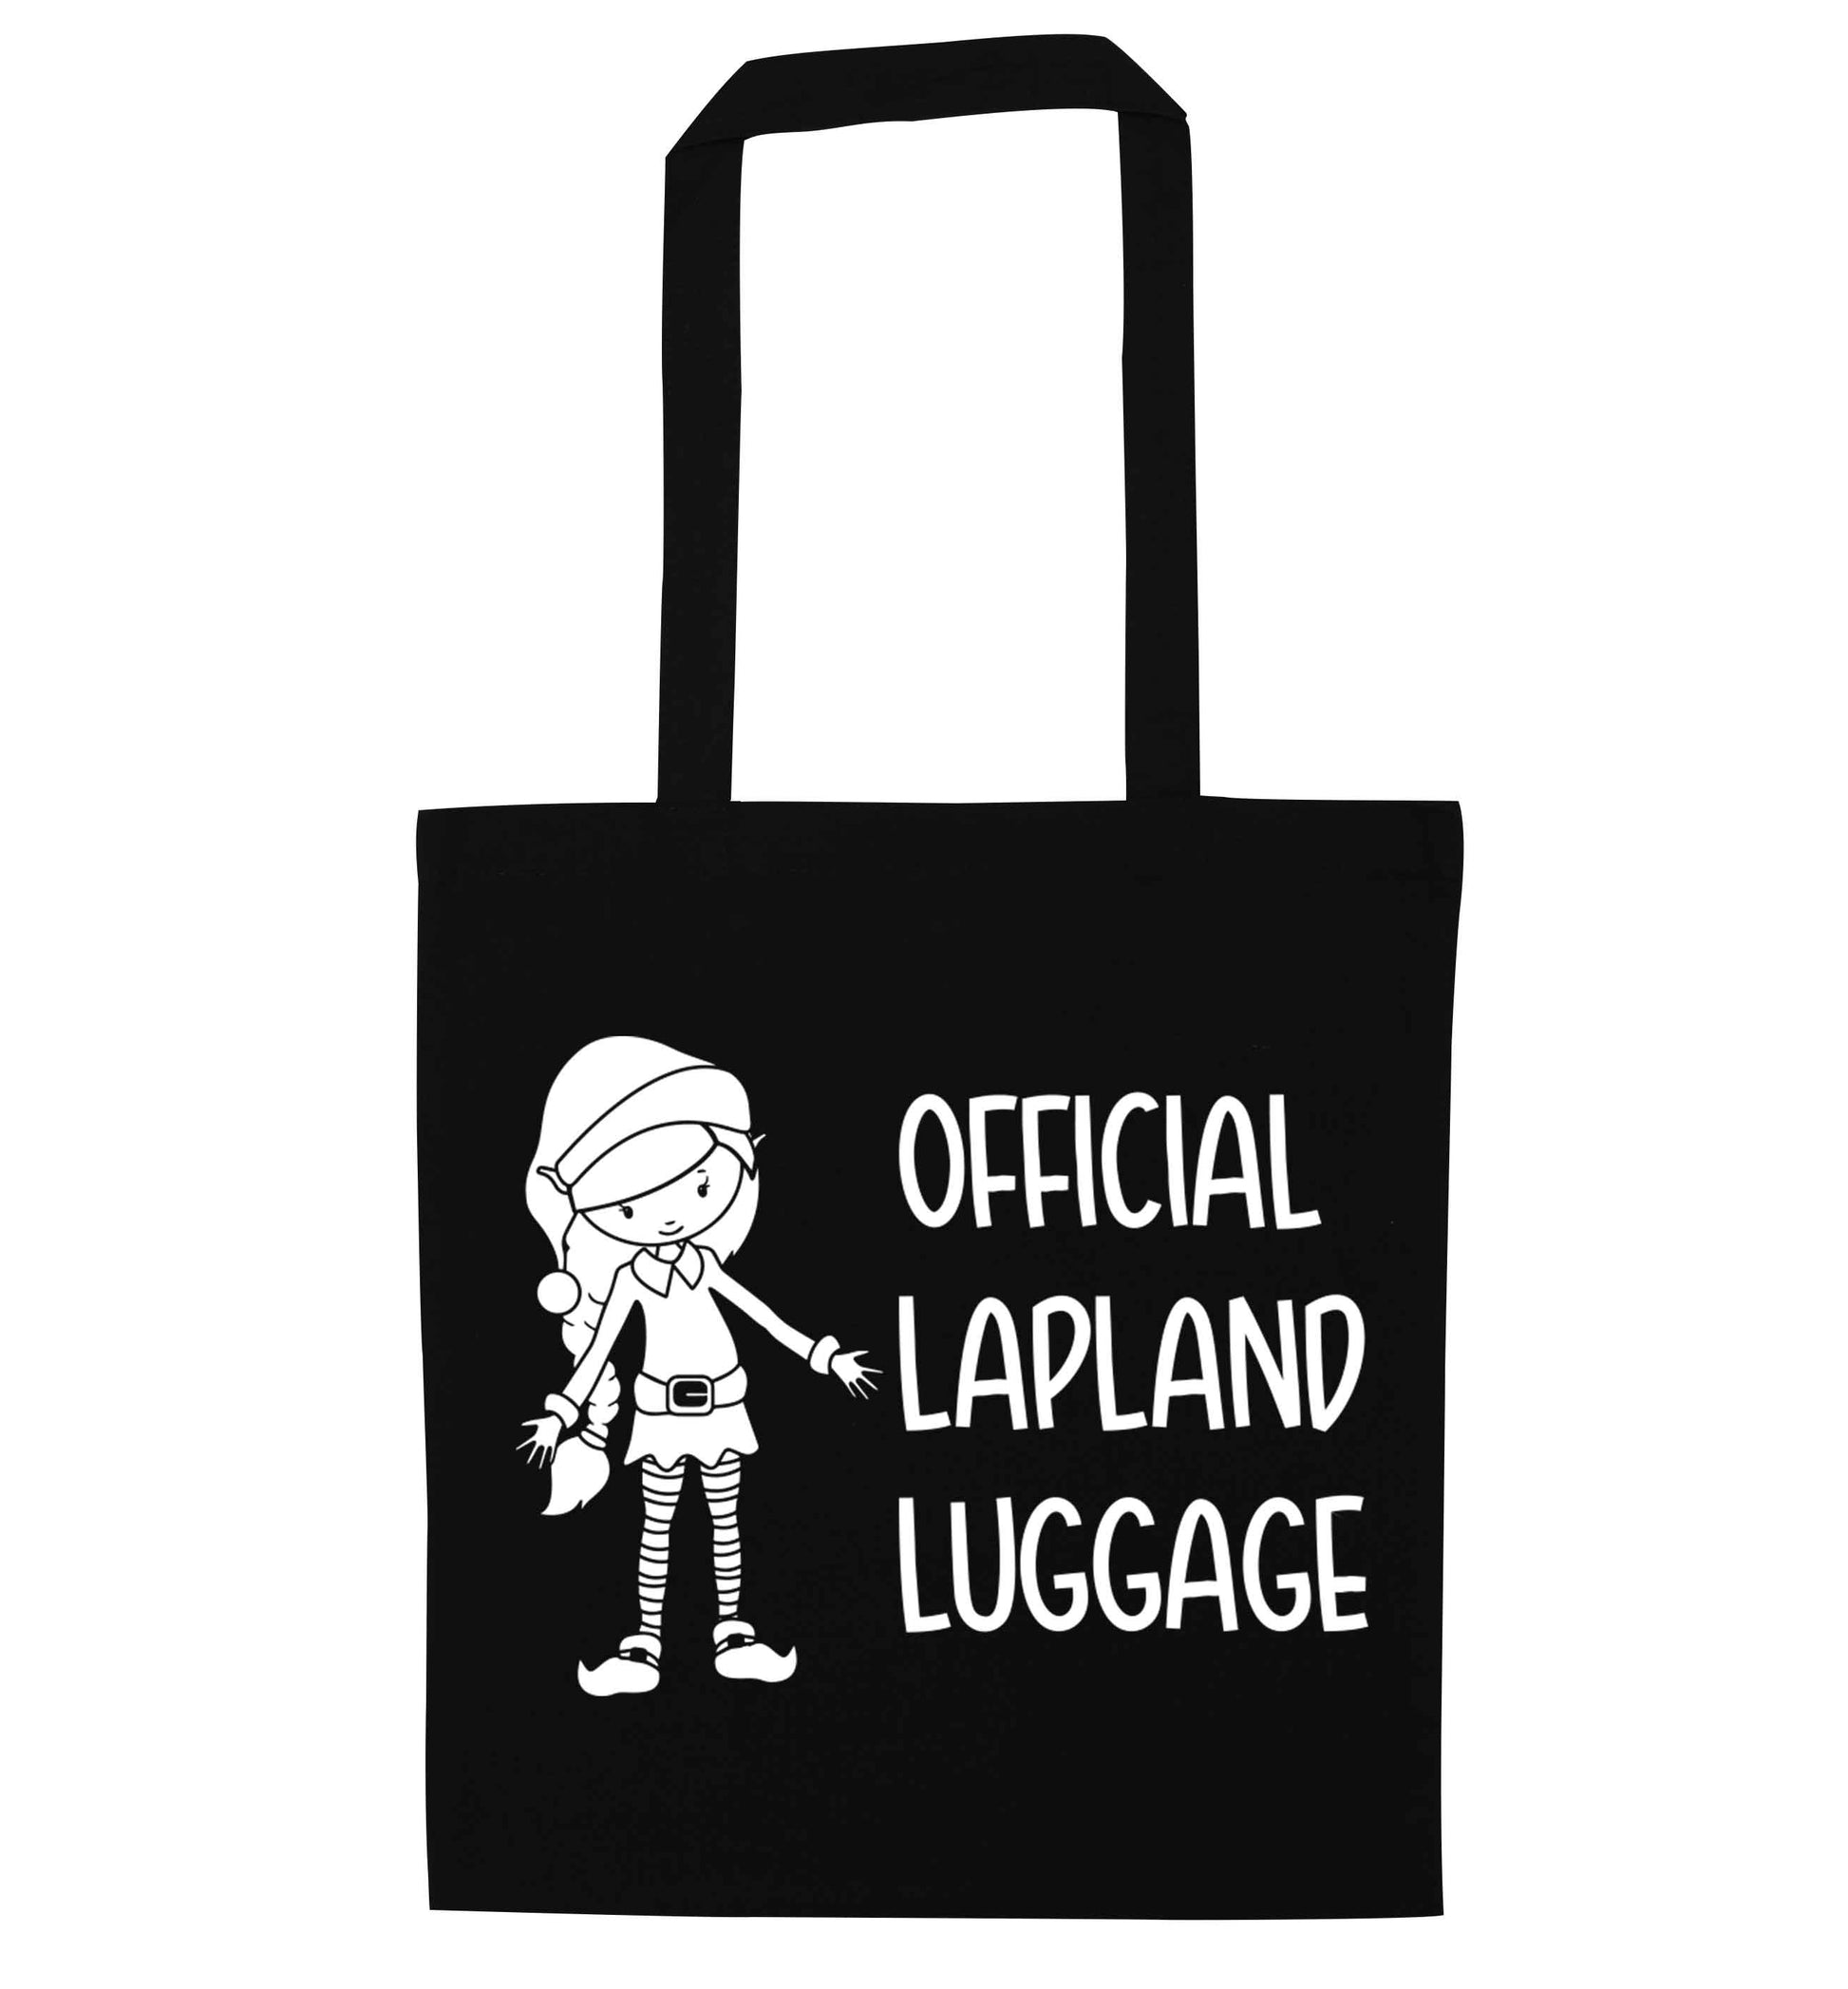 Official lapland luggage - Elf snowflake black tote bag